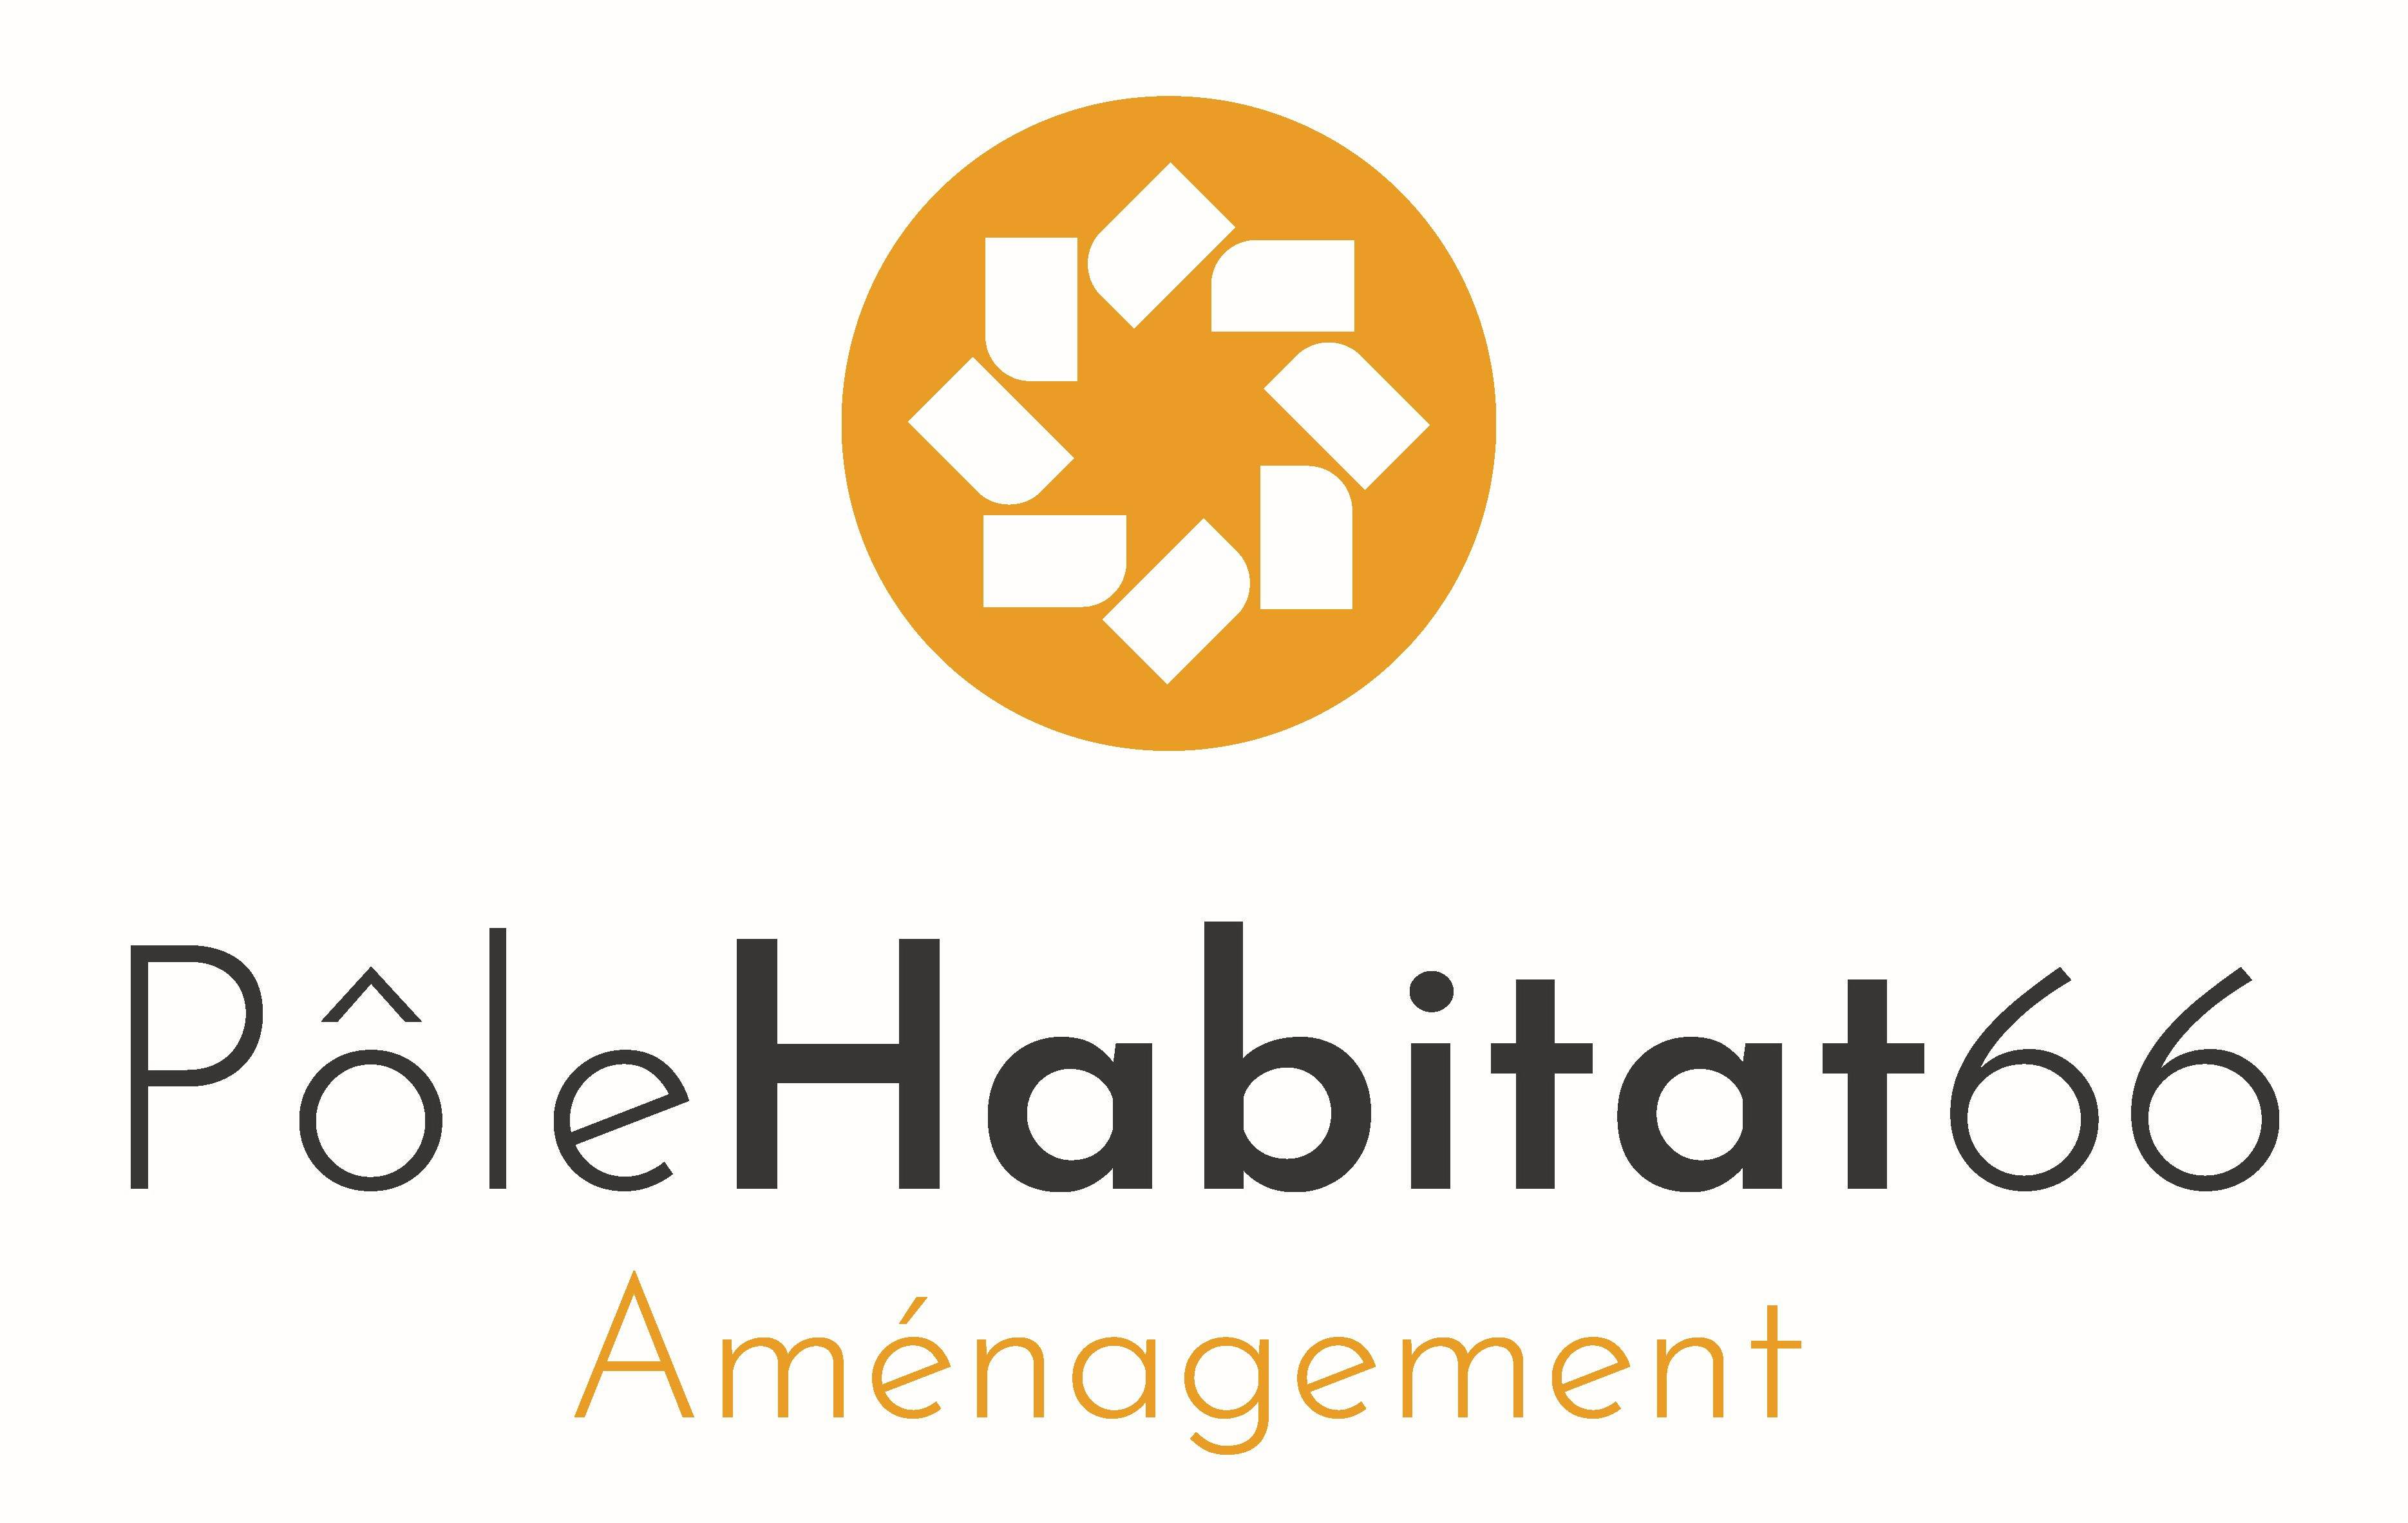 POLE HABITAT 66 Logo